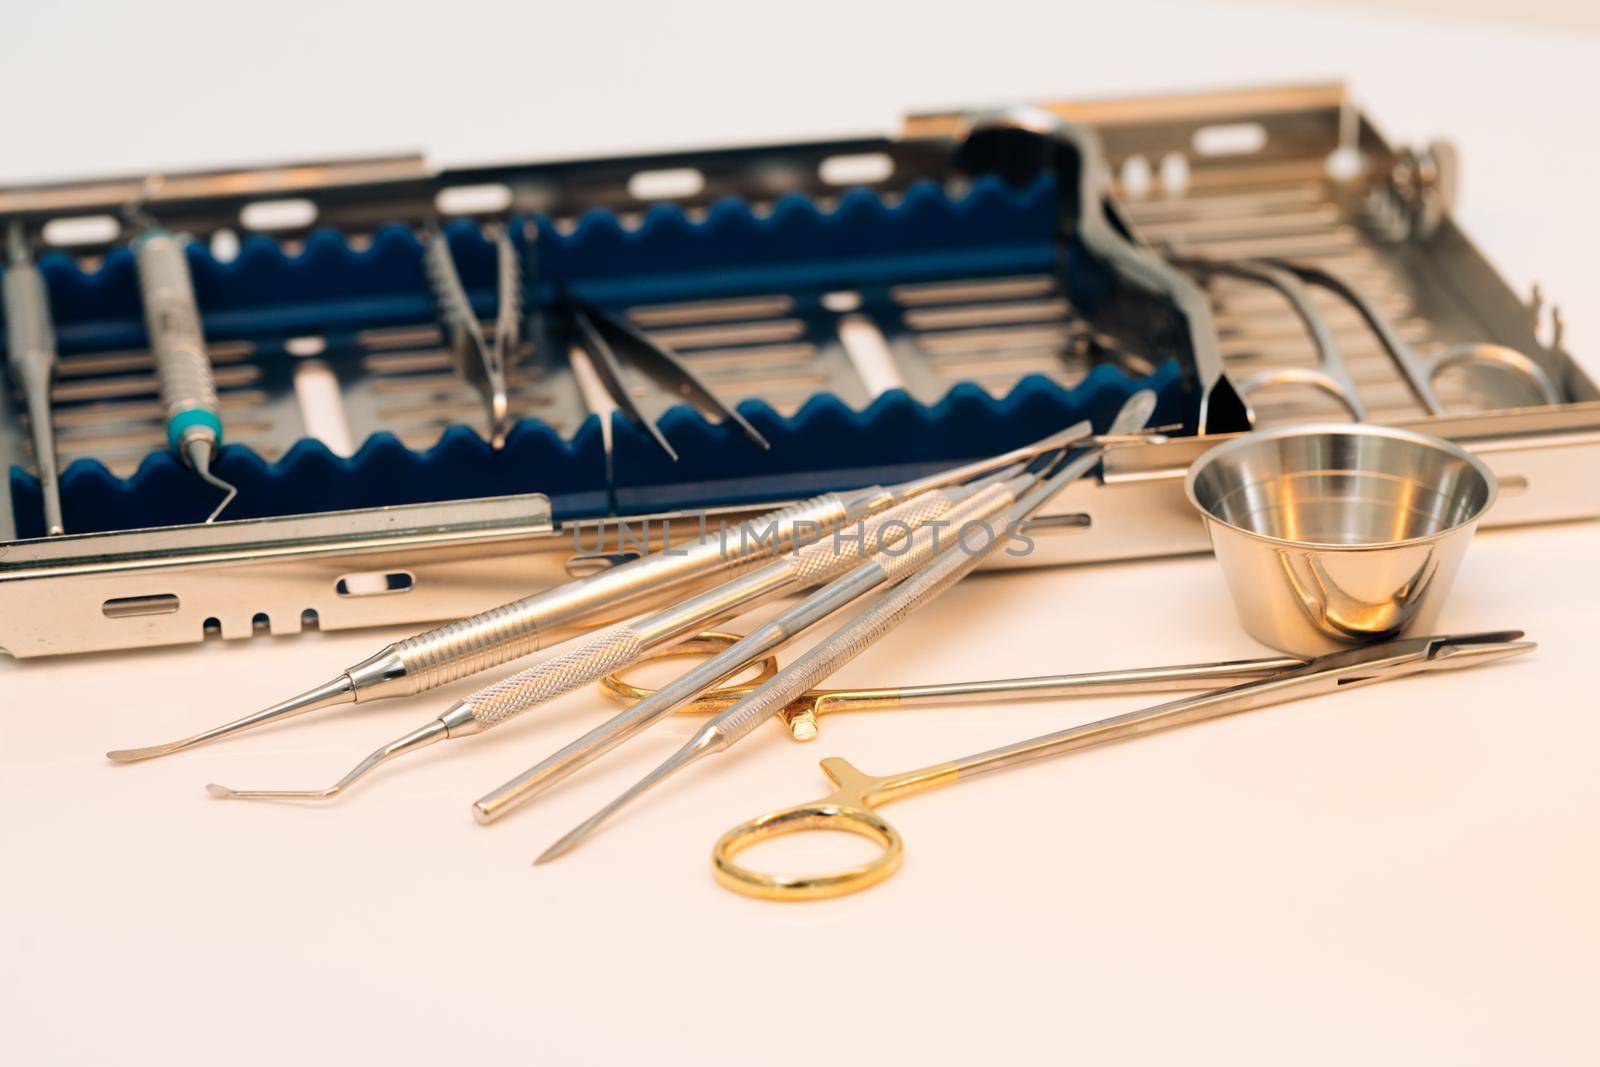 Surgical kit of instruments used in dental implantology. Dentist orthopedist tools. Dental implantation surgical set by uflypro